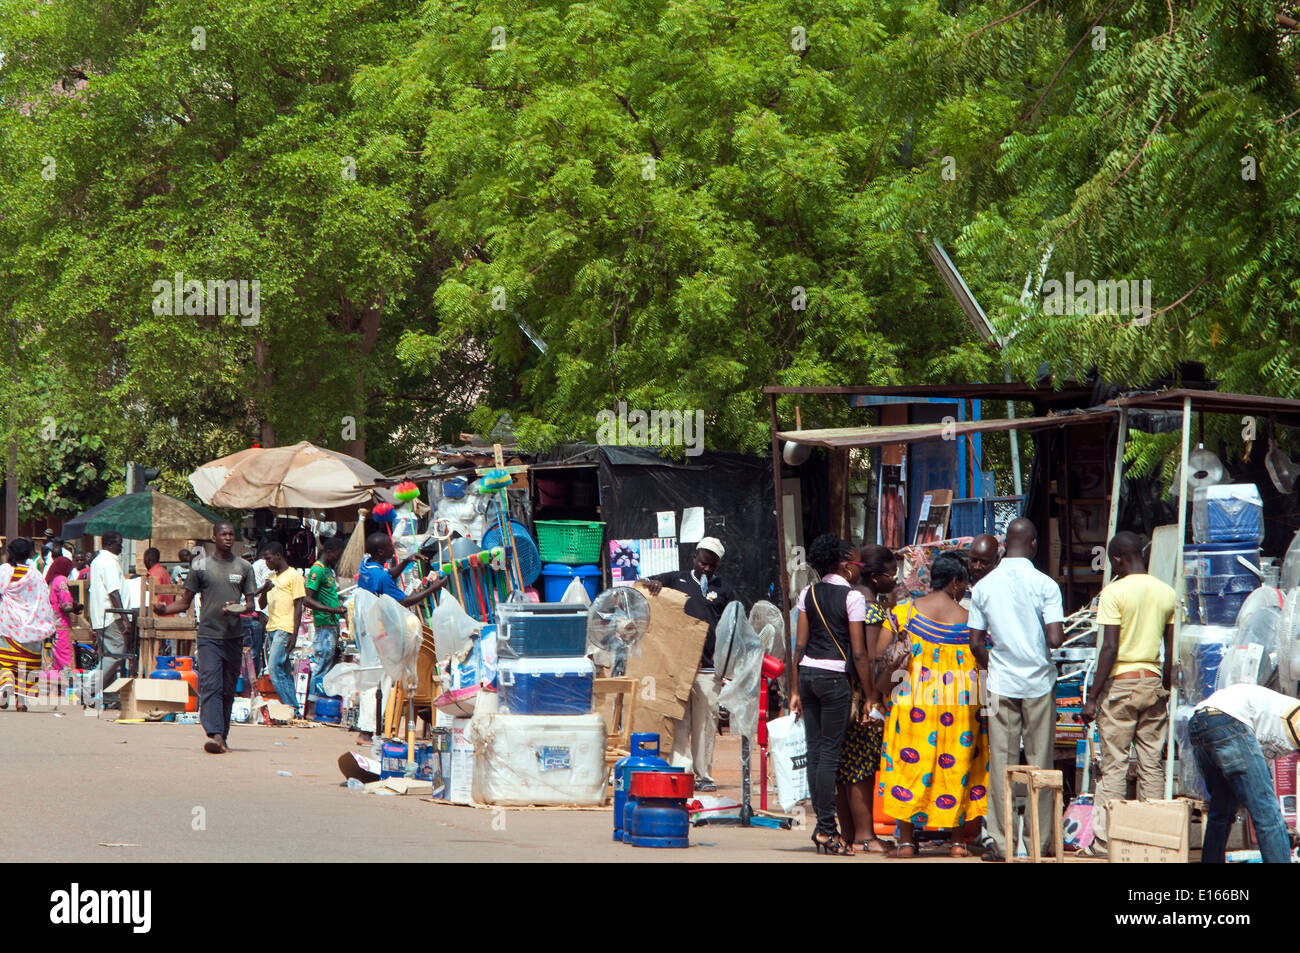 Scène de rue avec des vendeurs de rue, Ouagadougou, Burkina Faso Banque D'Images